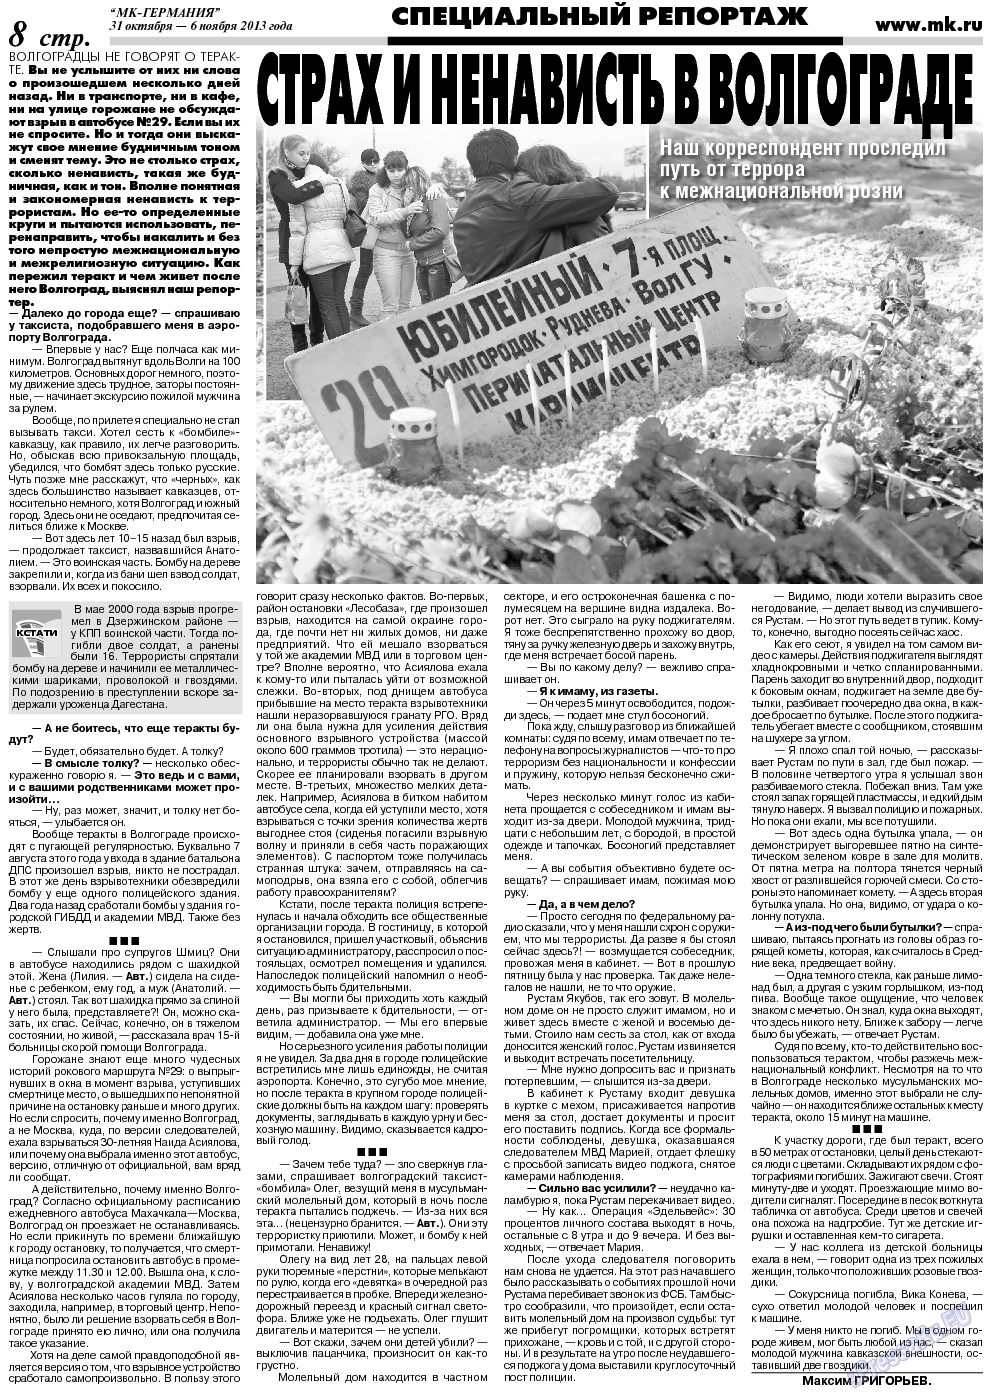 МК-Германия, газета. 2013 №44 стр.8